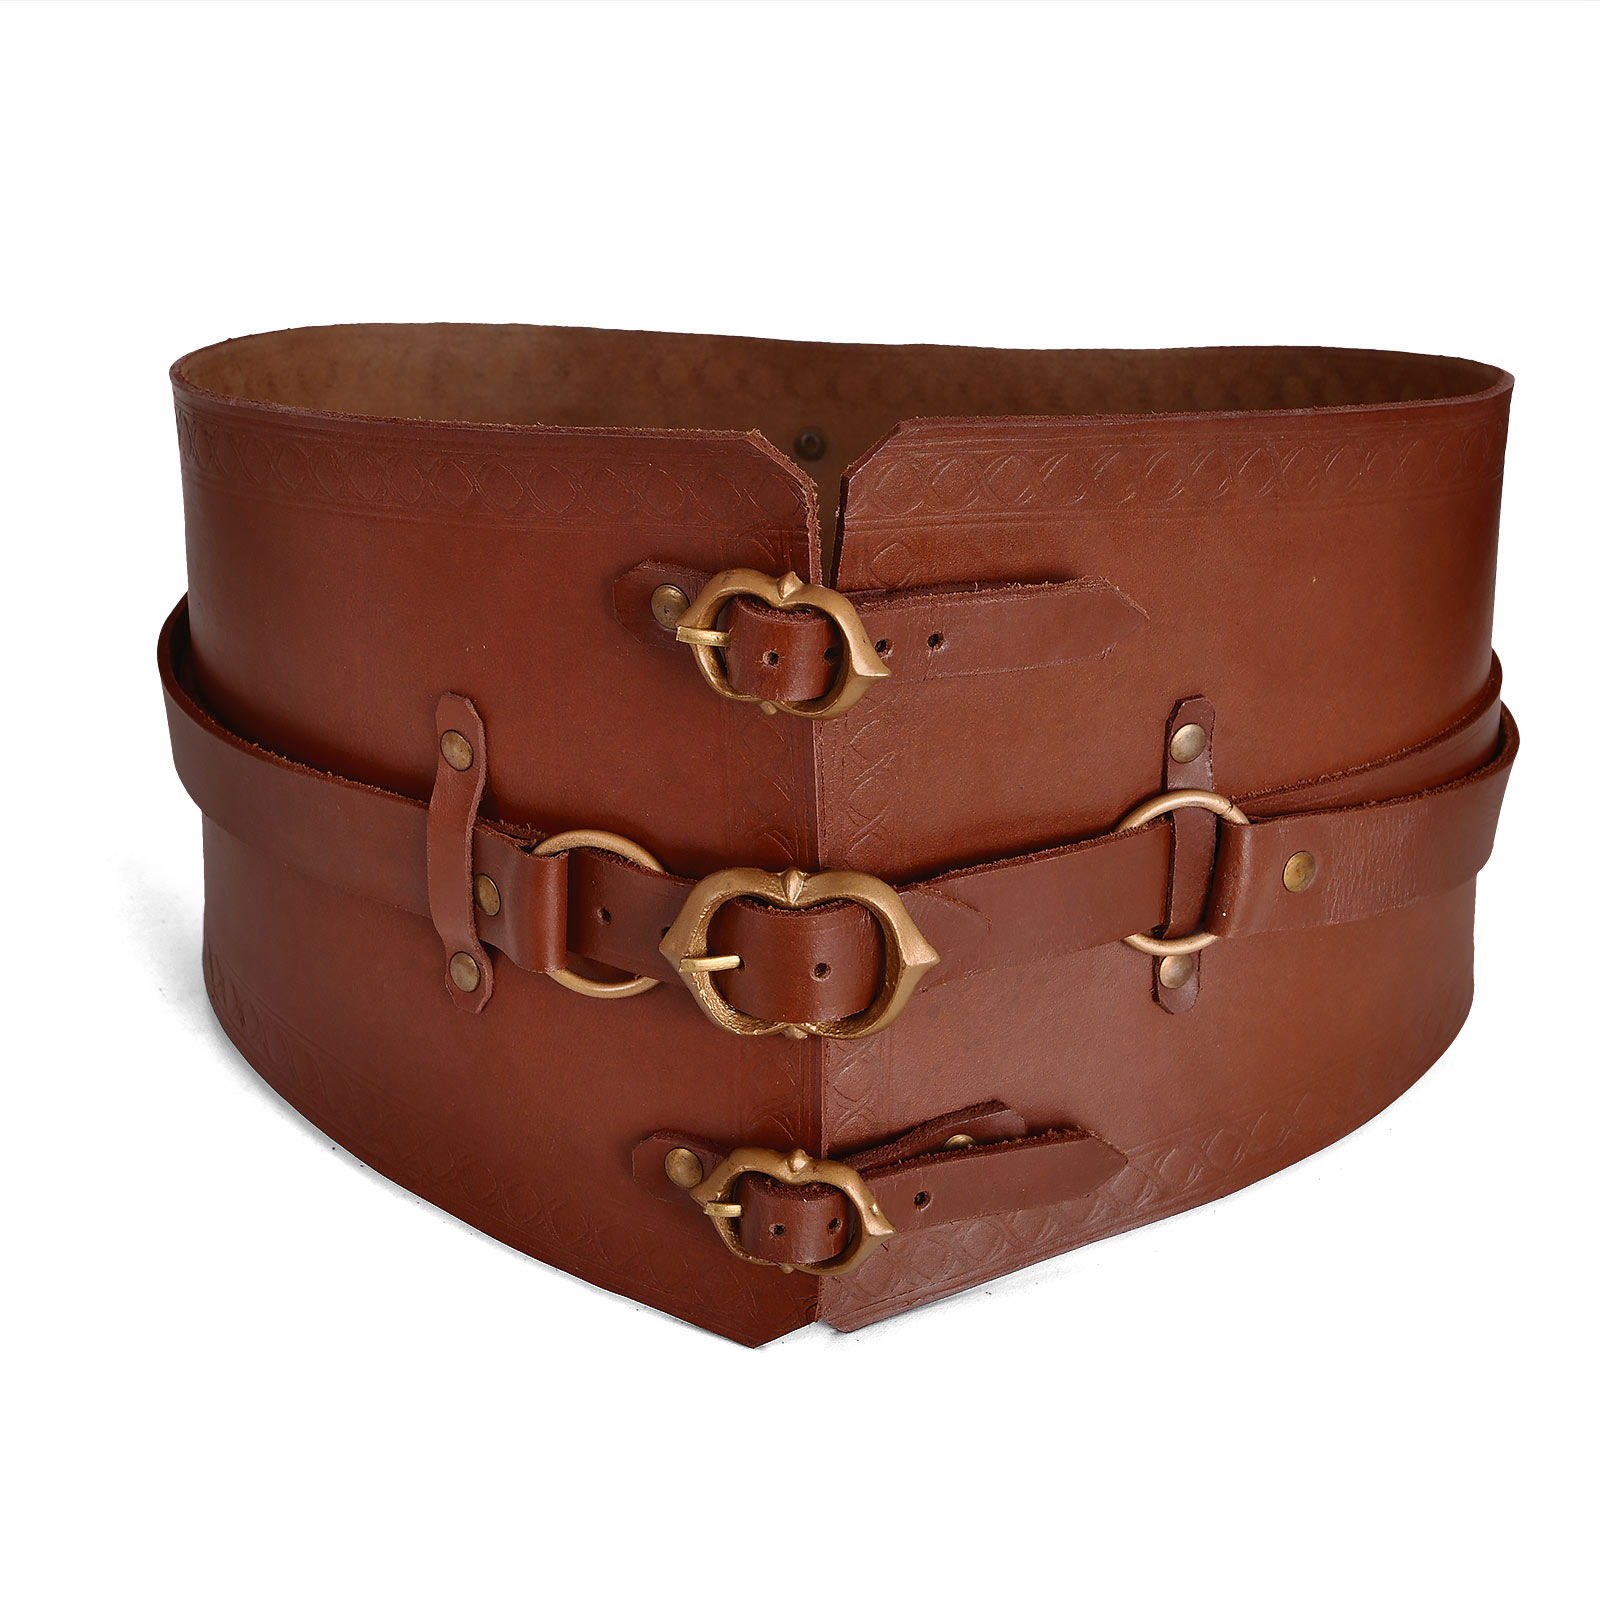 Medieval bodice belt Audrey deluxe brown